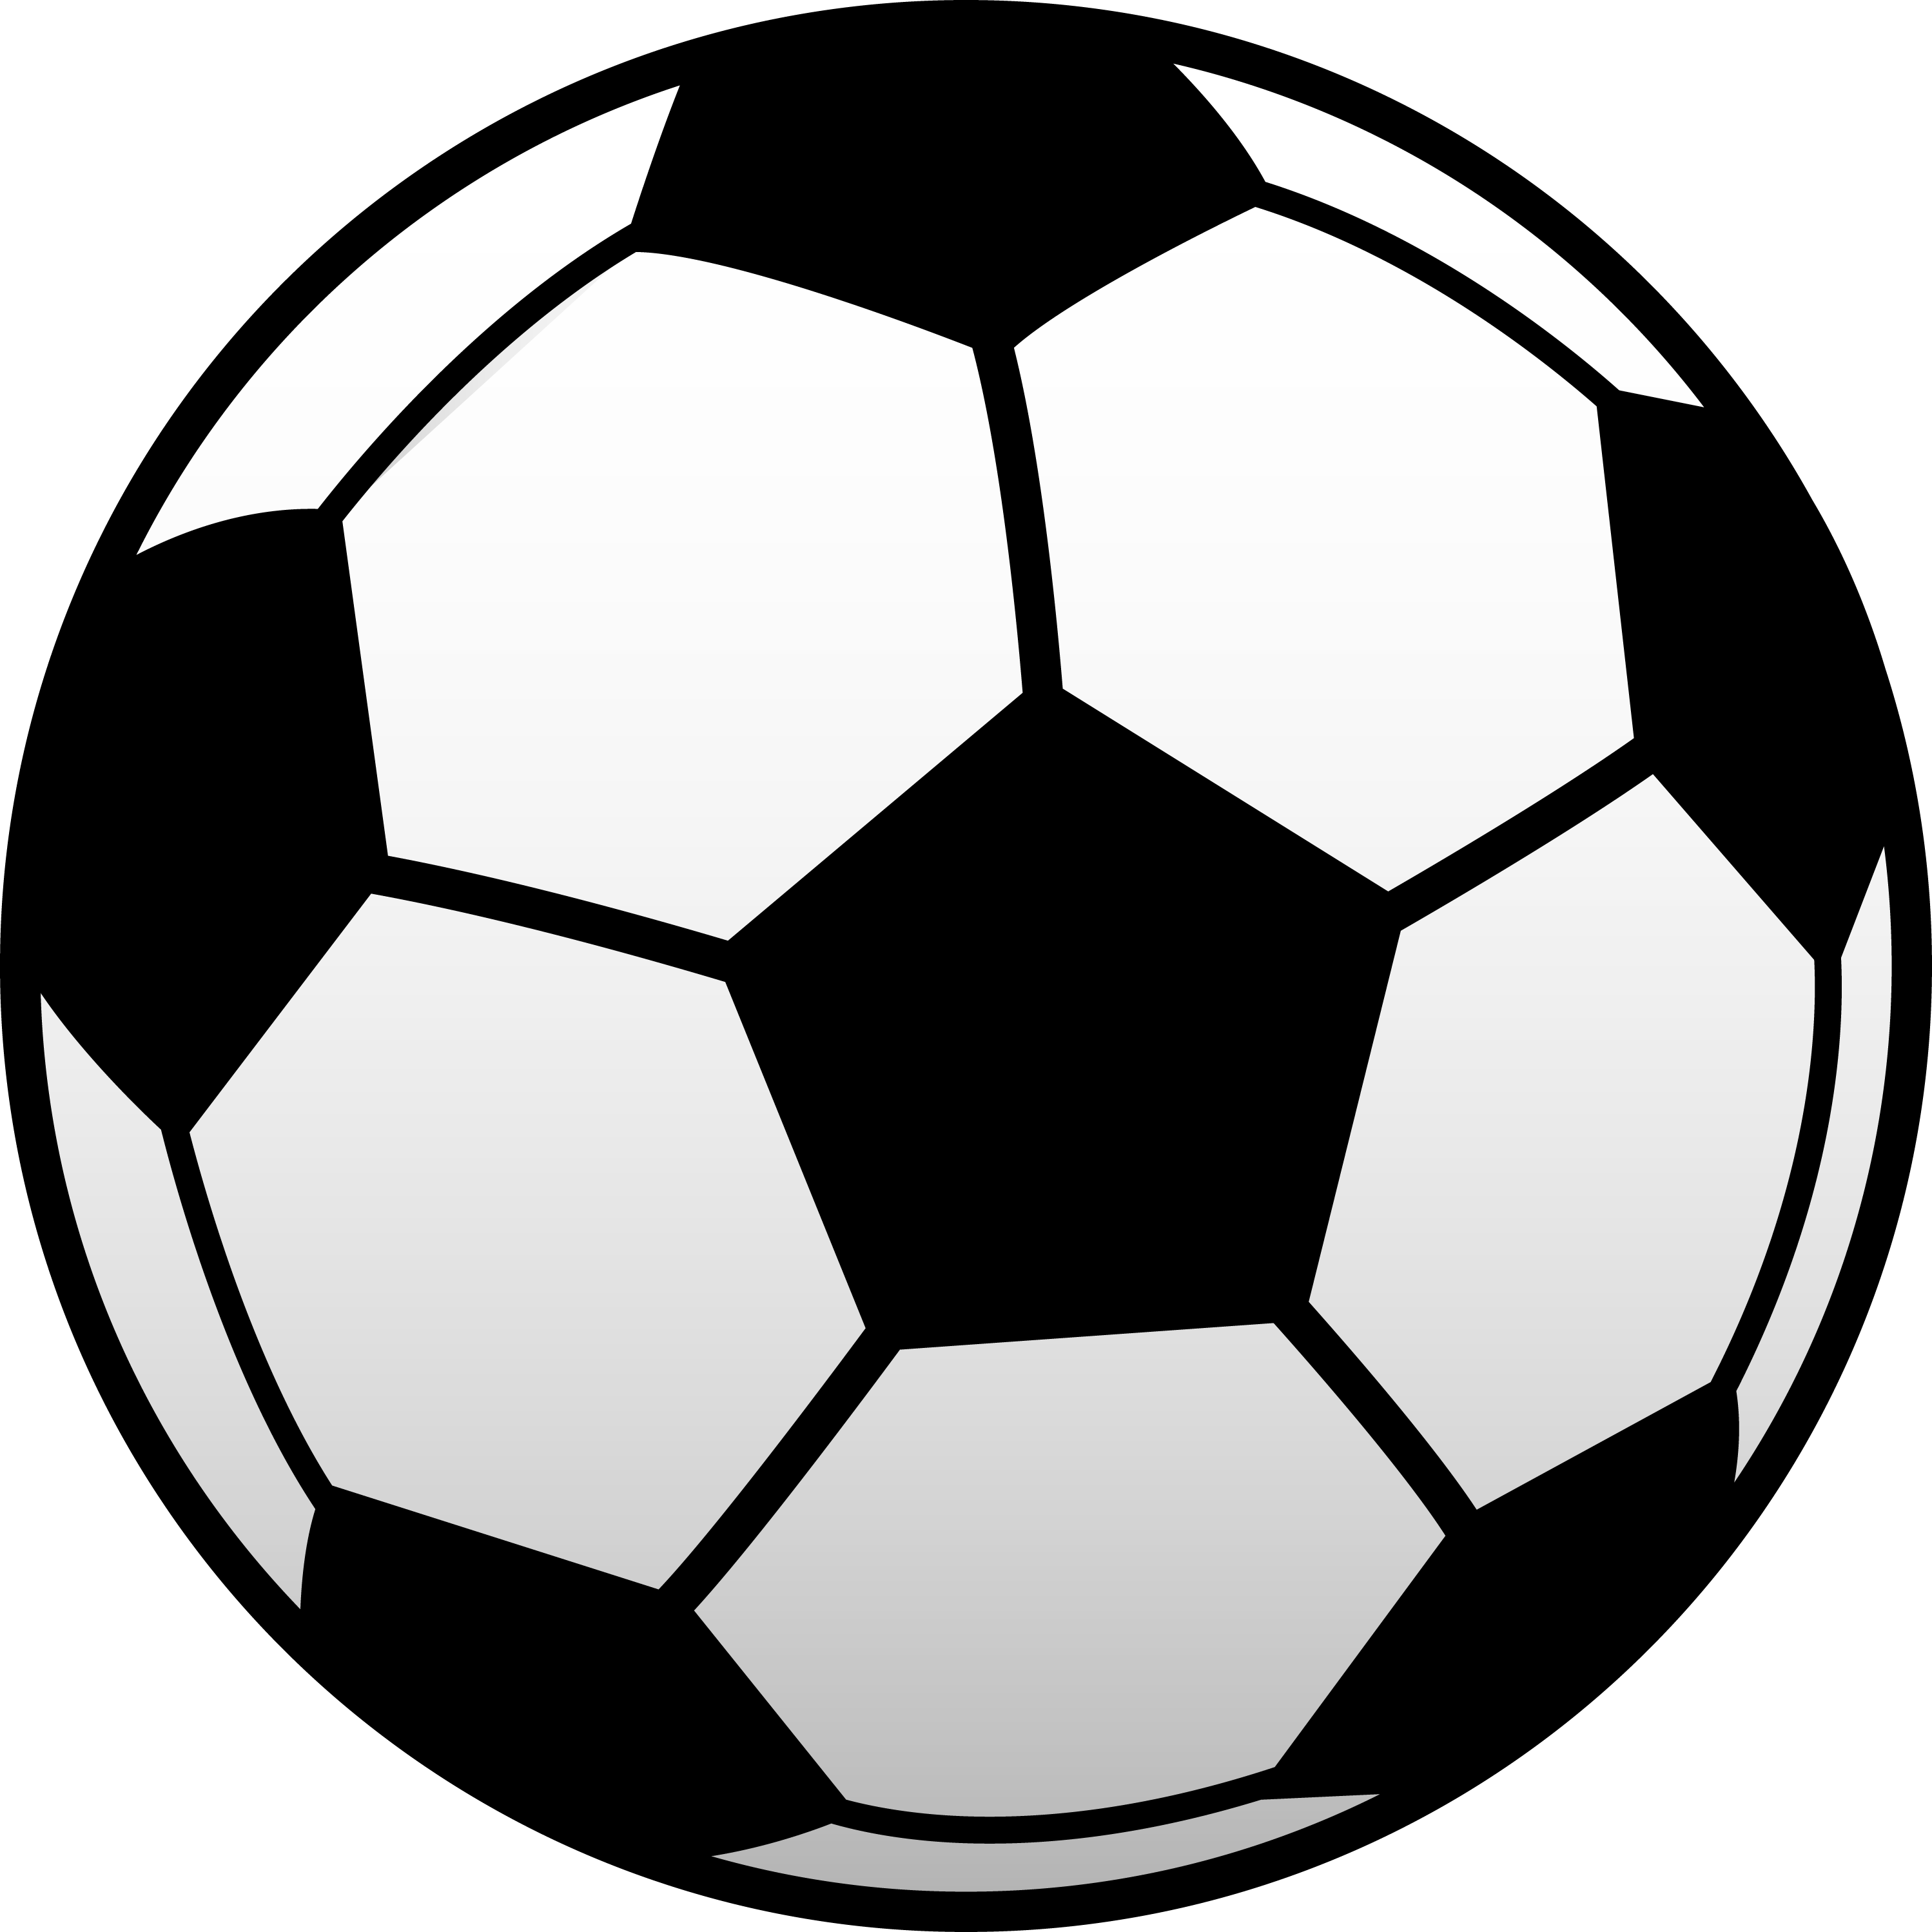 soccer ball clipart - Soccer Ball Images Clip Art